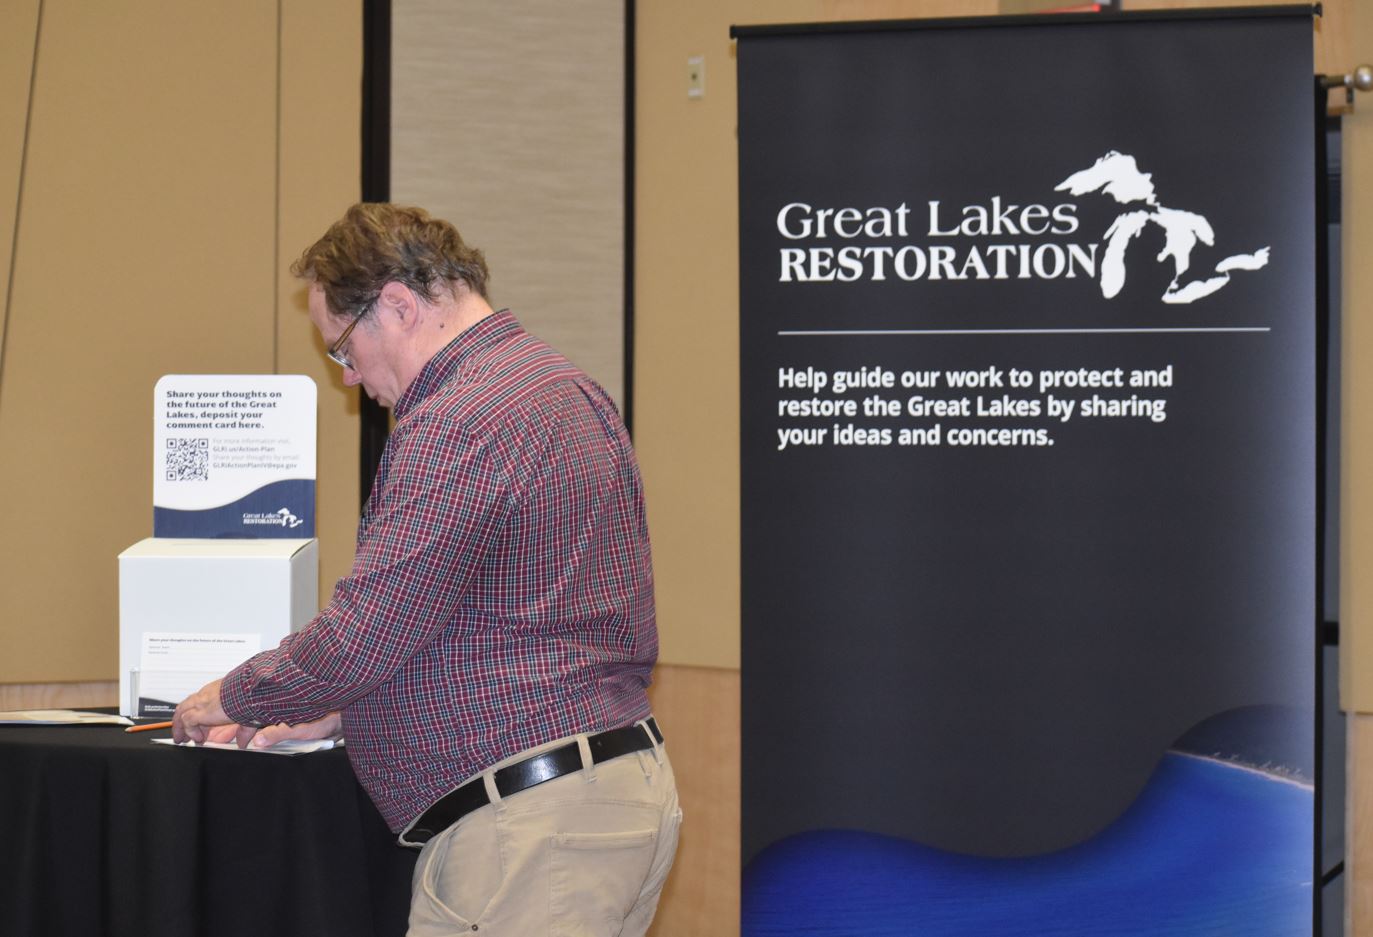 EPA seeks input on next plan to guide restoration work across Great Lakes